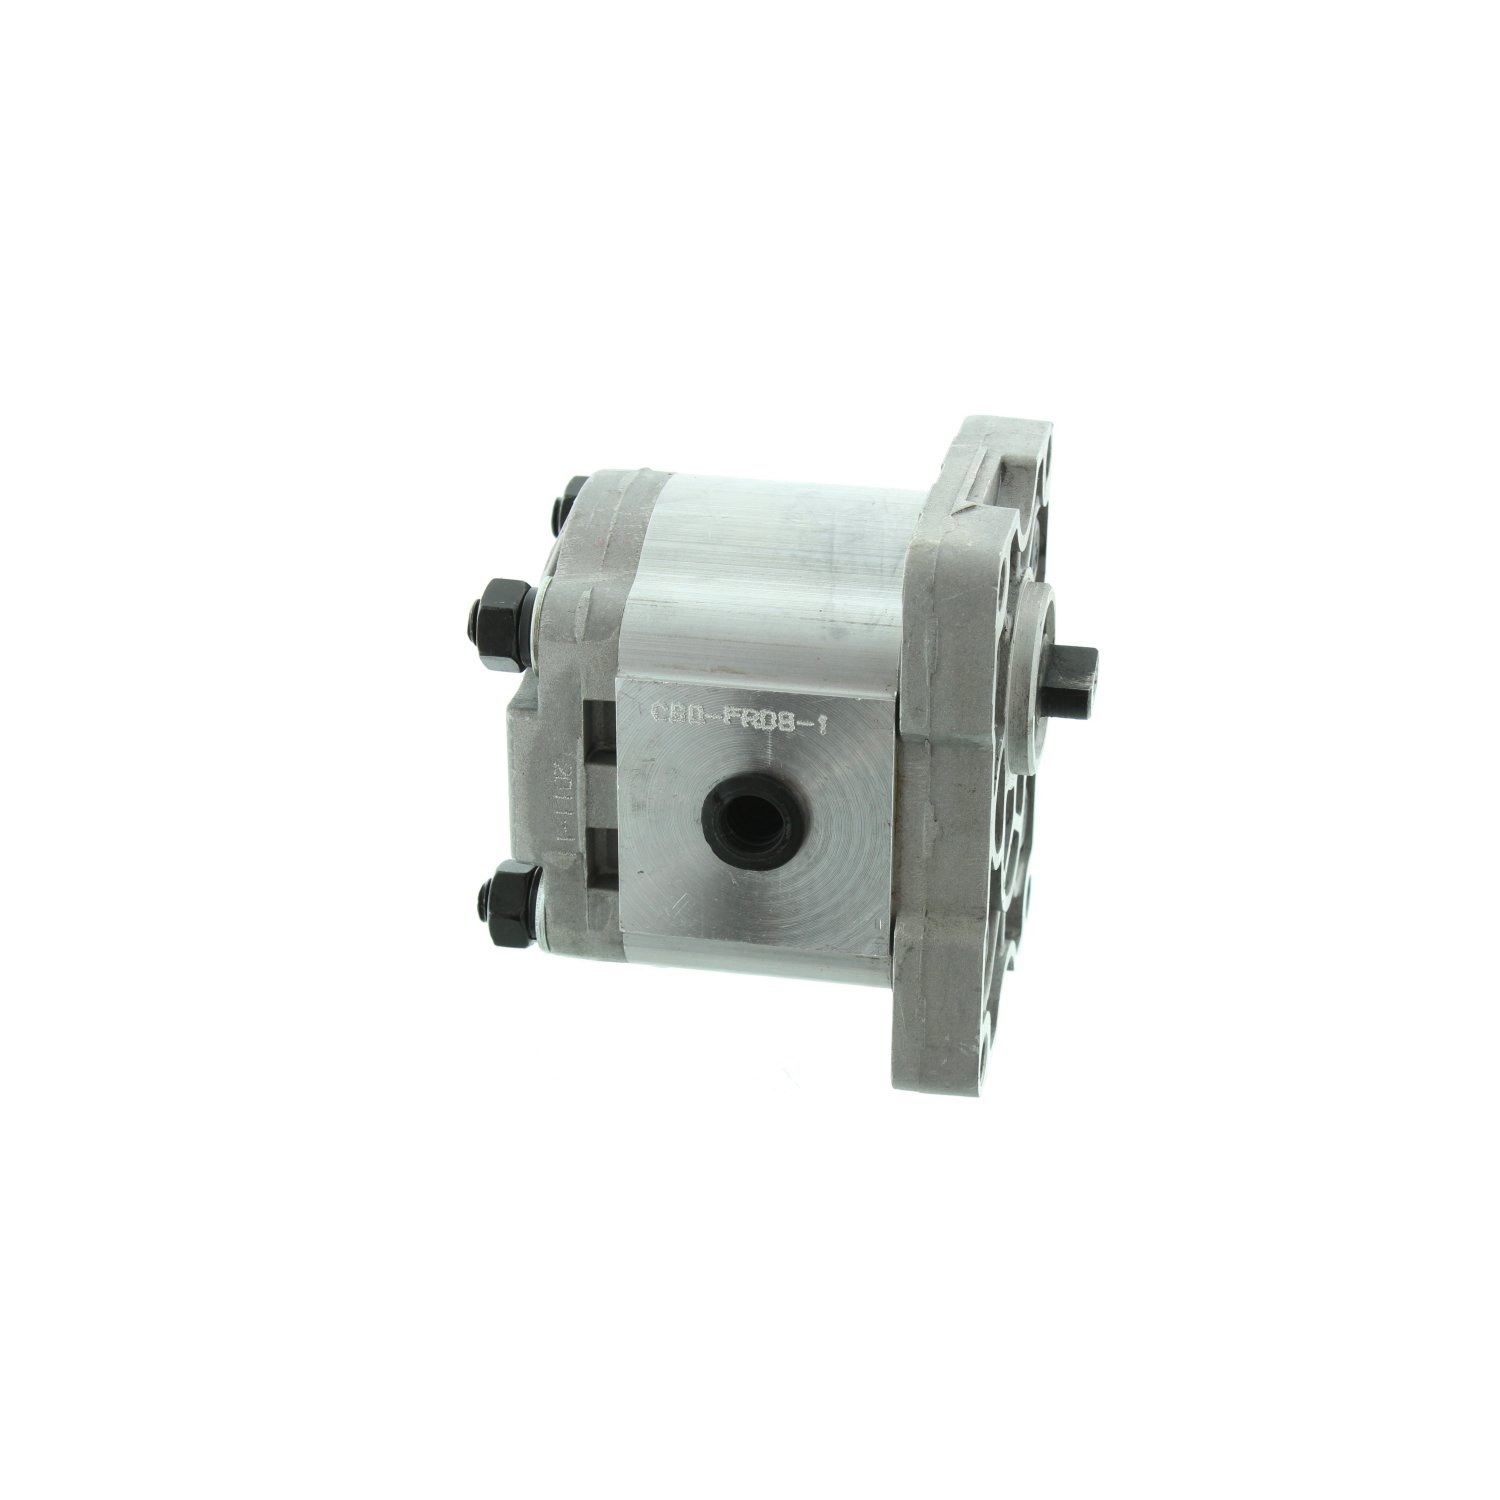 Ölpumpe Pumpe Hydraulikpumpe passend für ATIKA ASP 8-1050 & 6-1050  Holzspalter